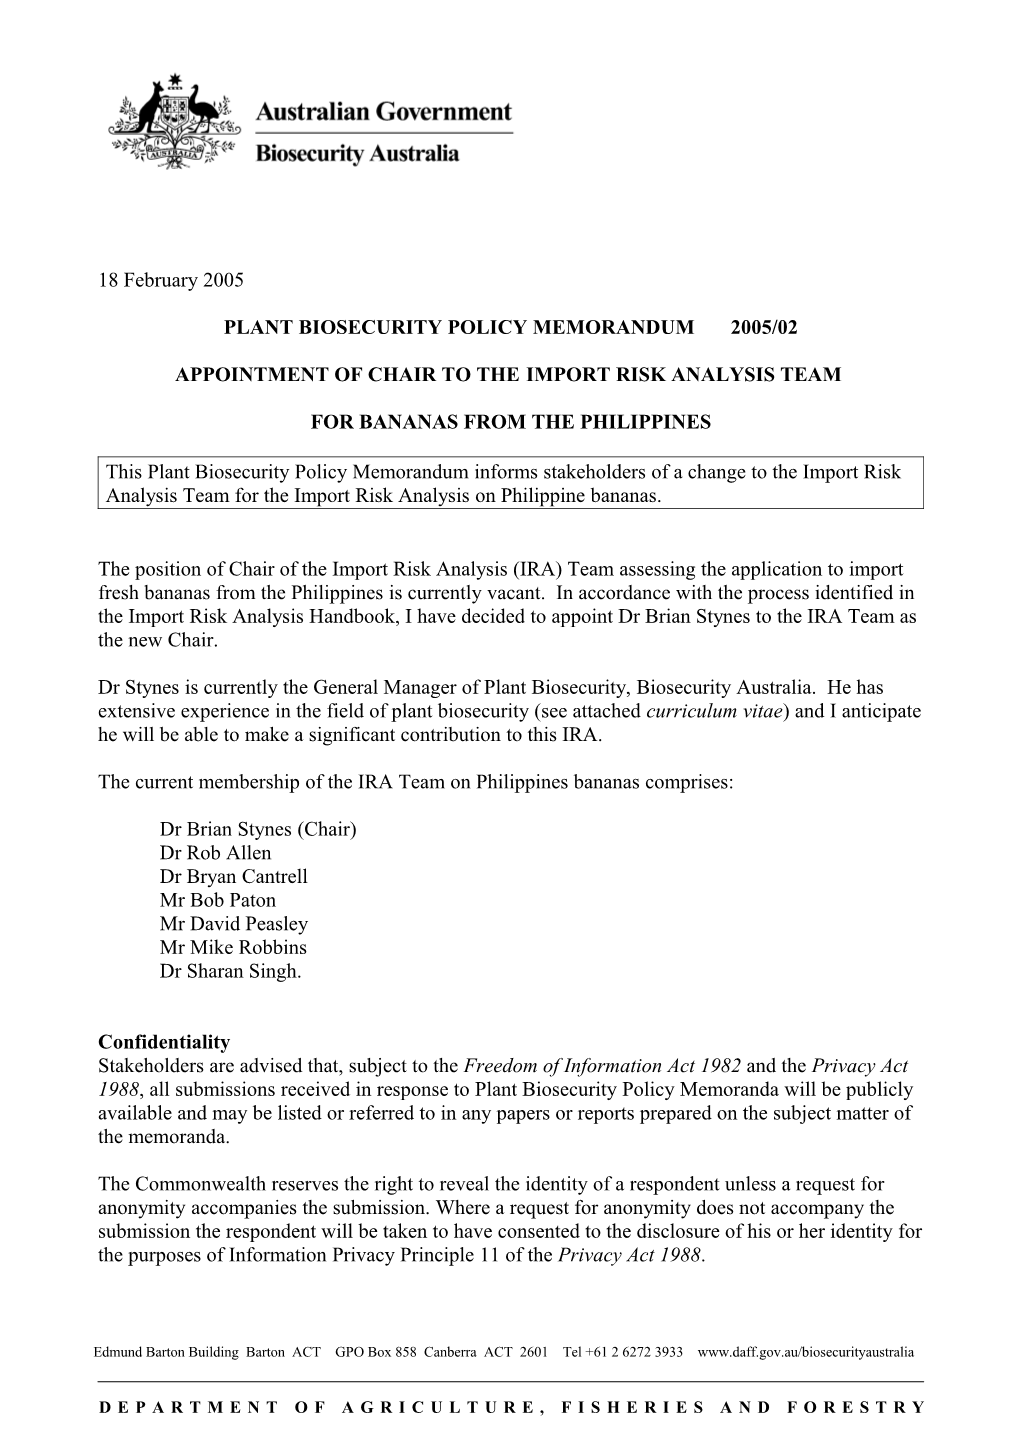 Plant Biosecurity Policy Memorandum 2005/02